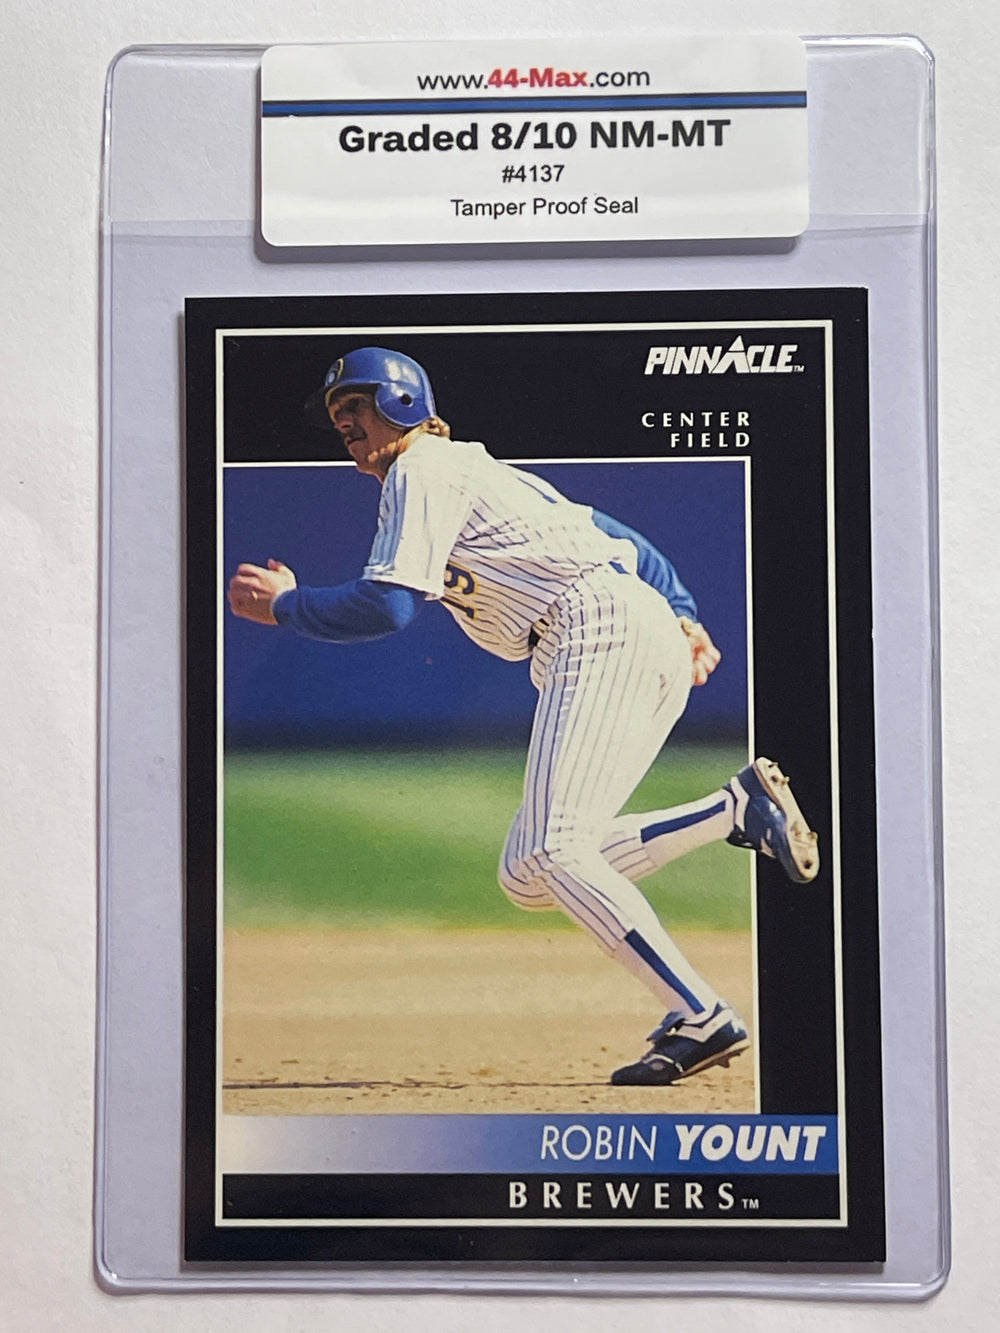 Robin Yount 1992 Pinnacle Baseball Card. 44-Max 8/10 NM-MT #4137